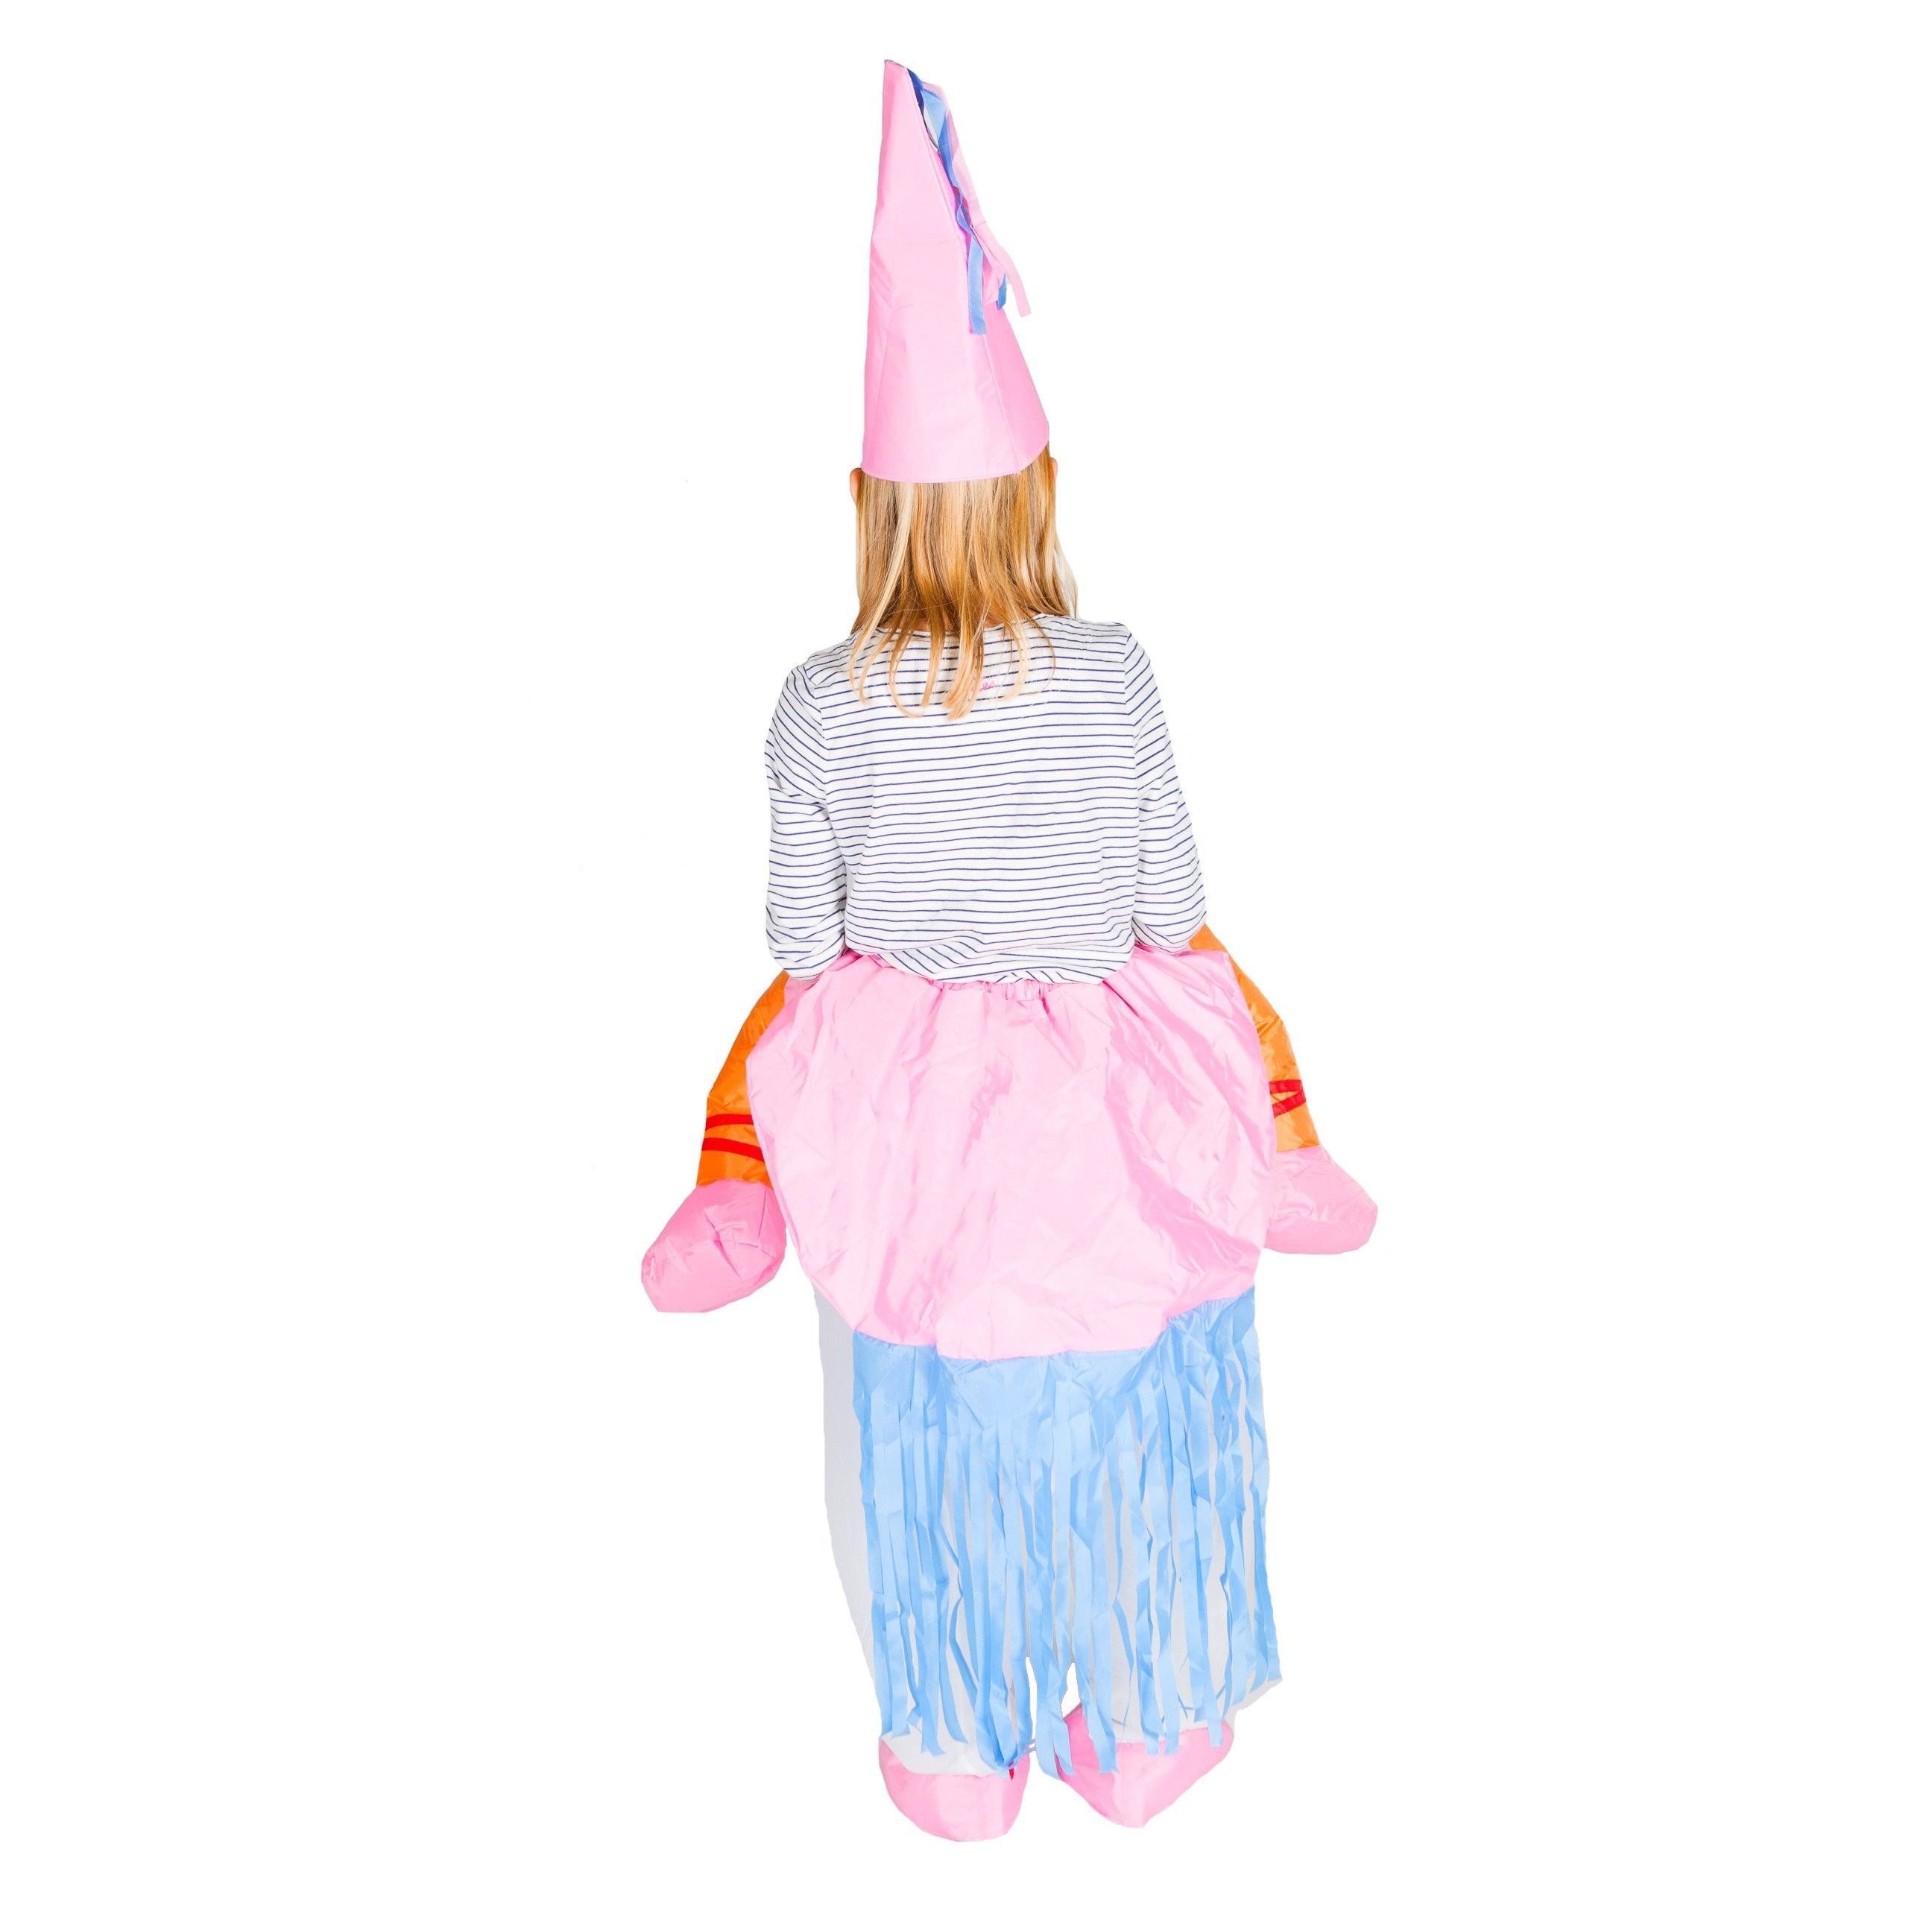 Fancy Dress - Kids Inflatable Unicorn Costume